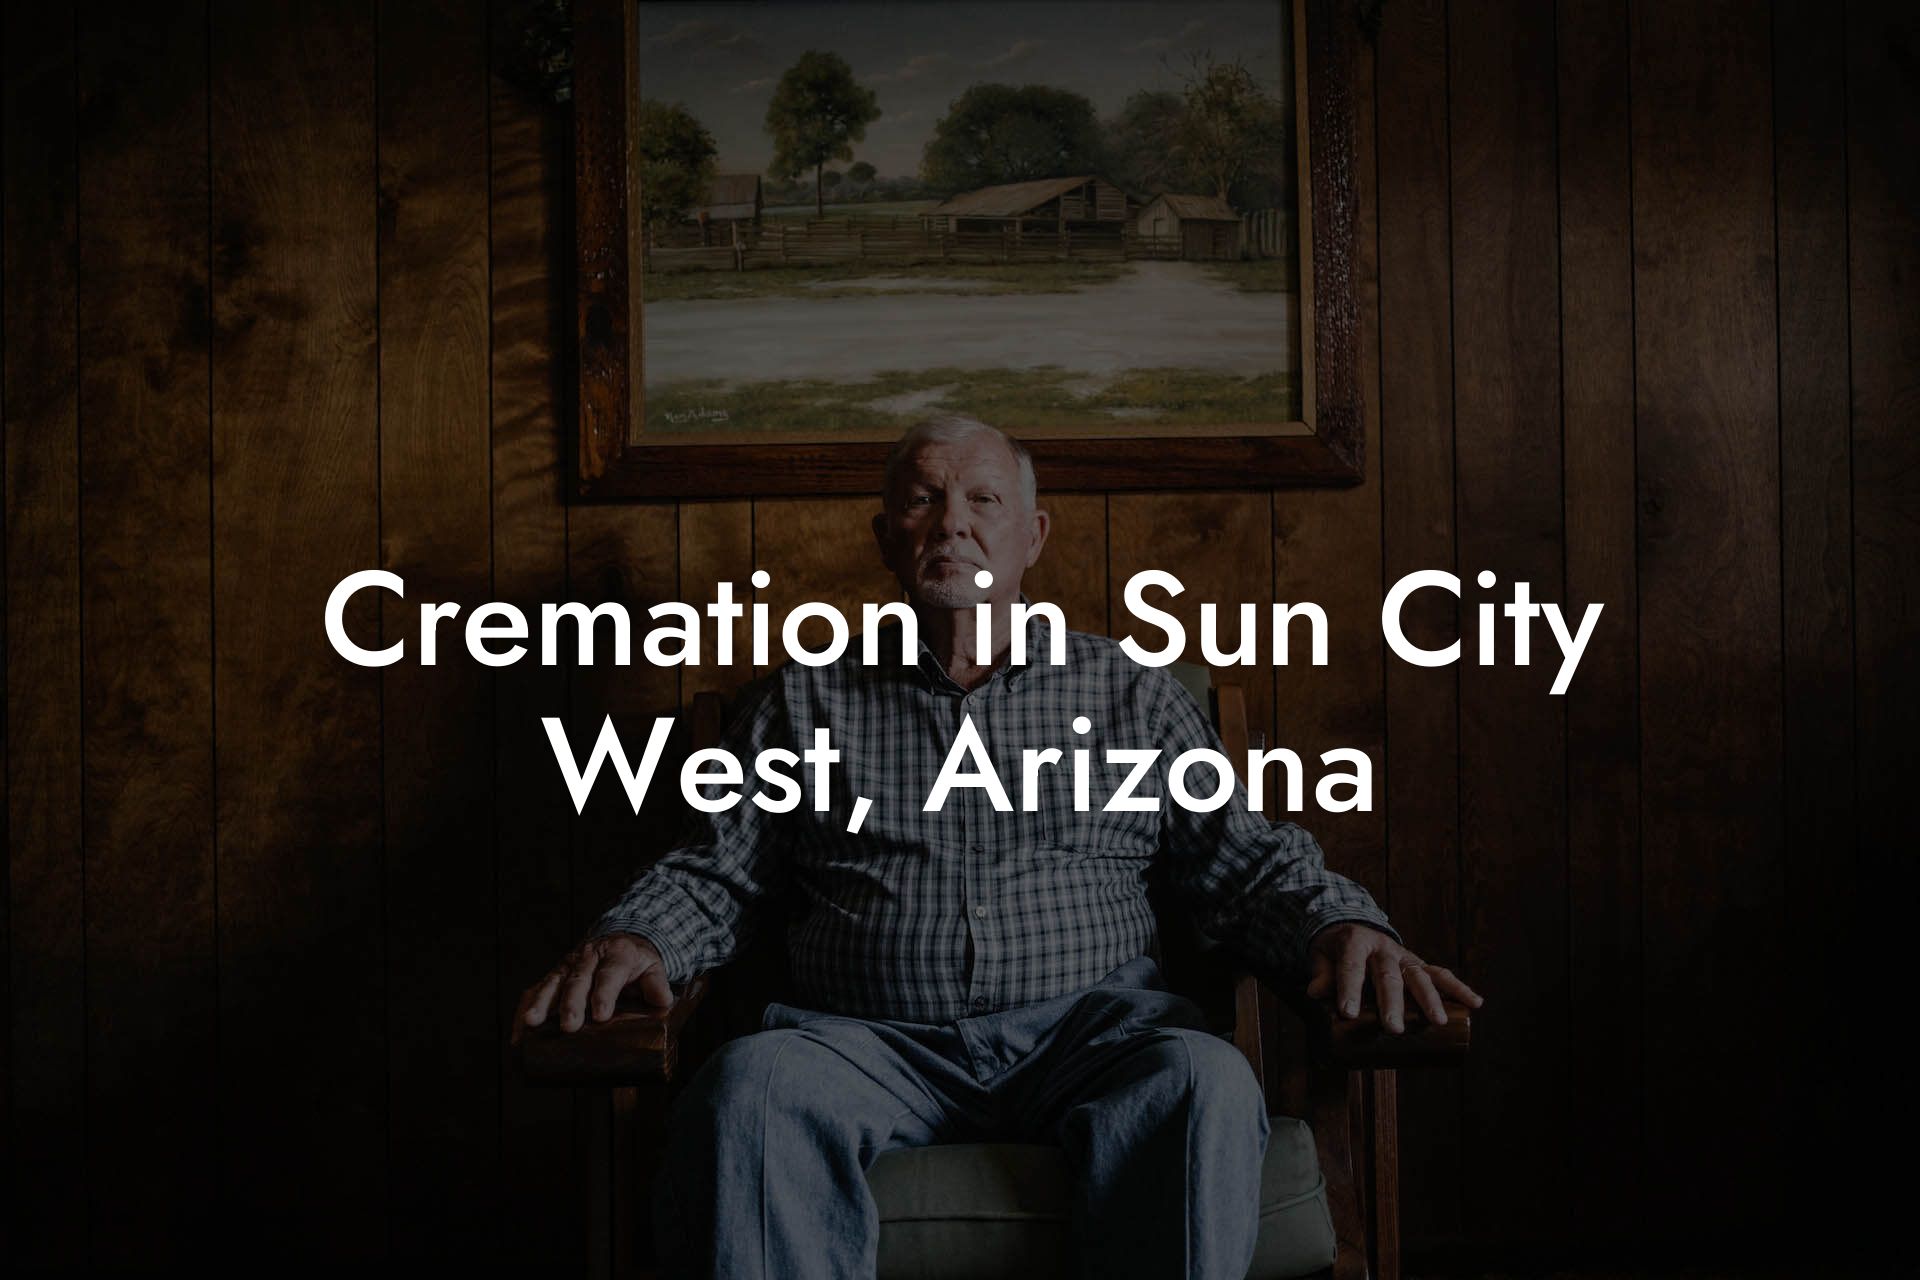 Cremation in Sun City West, Arizona